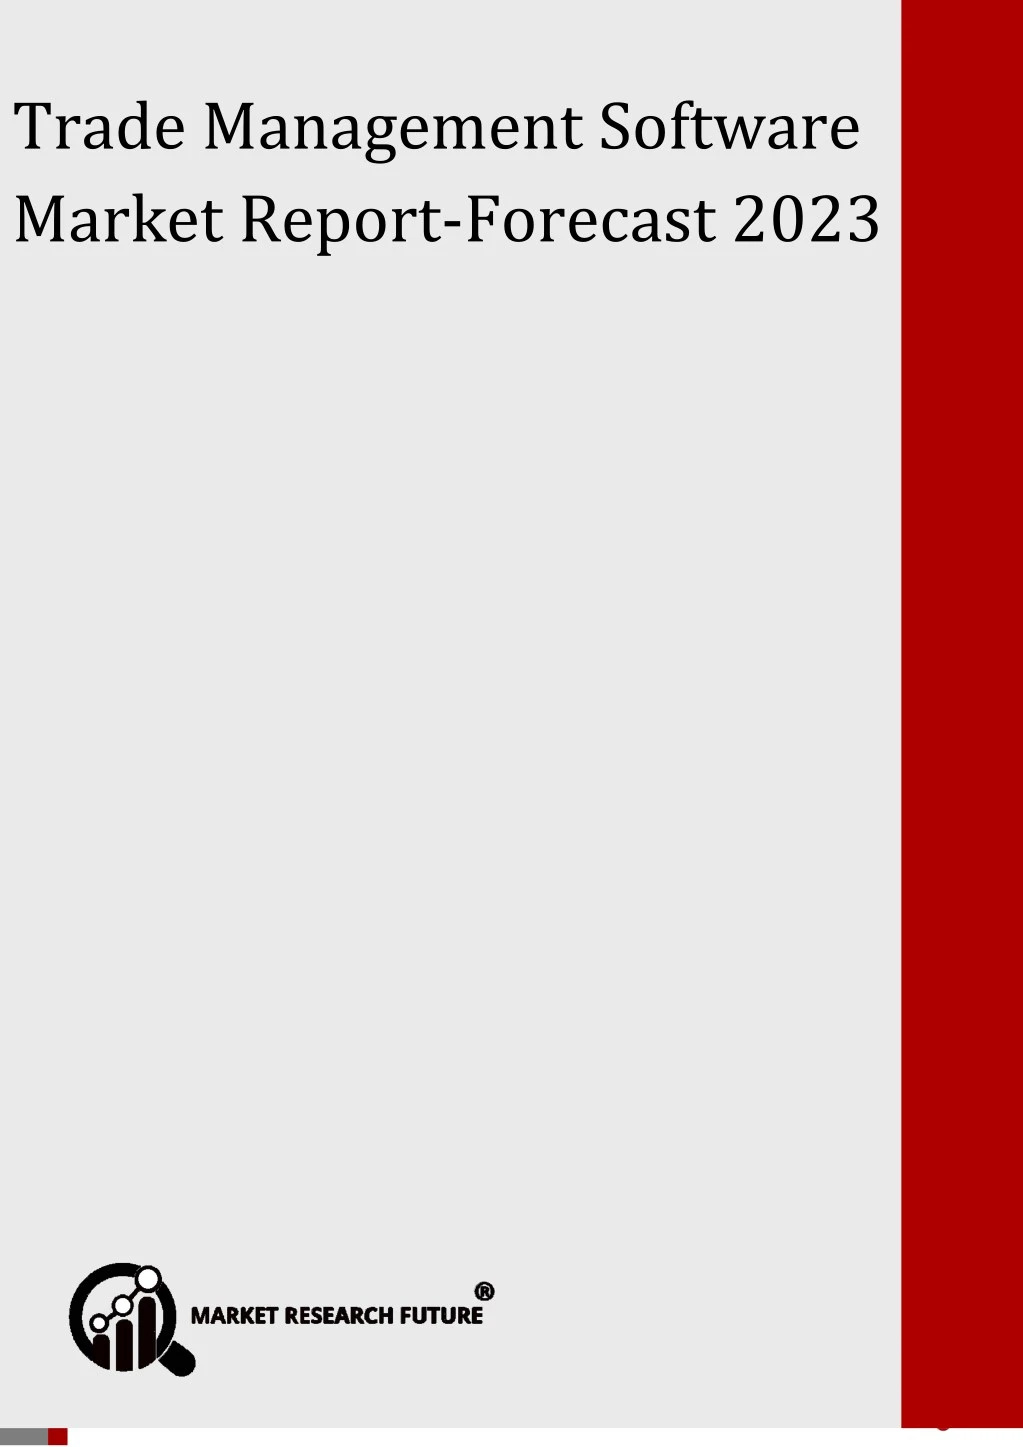 optical sorter market forecast 2023 trade